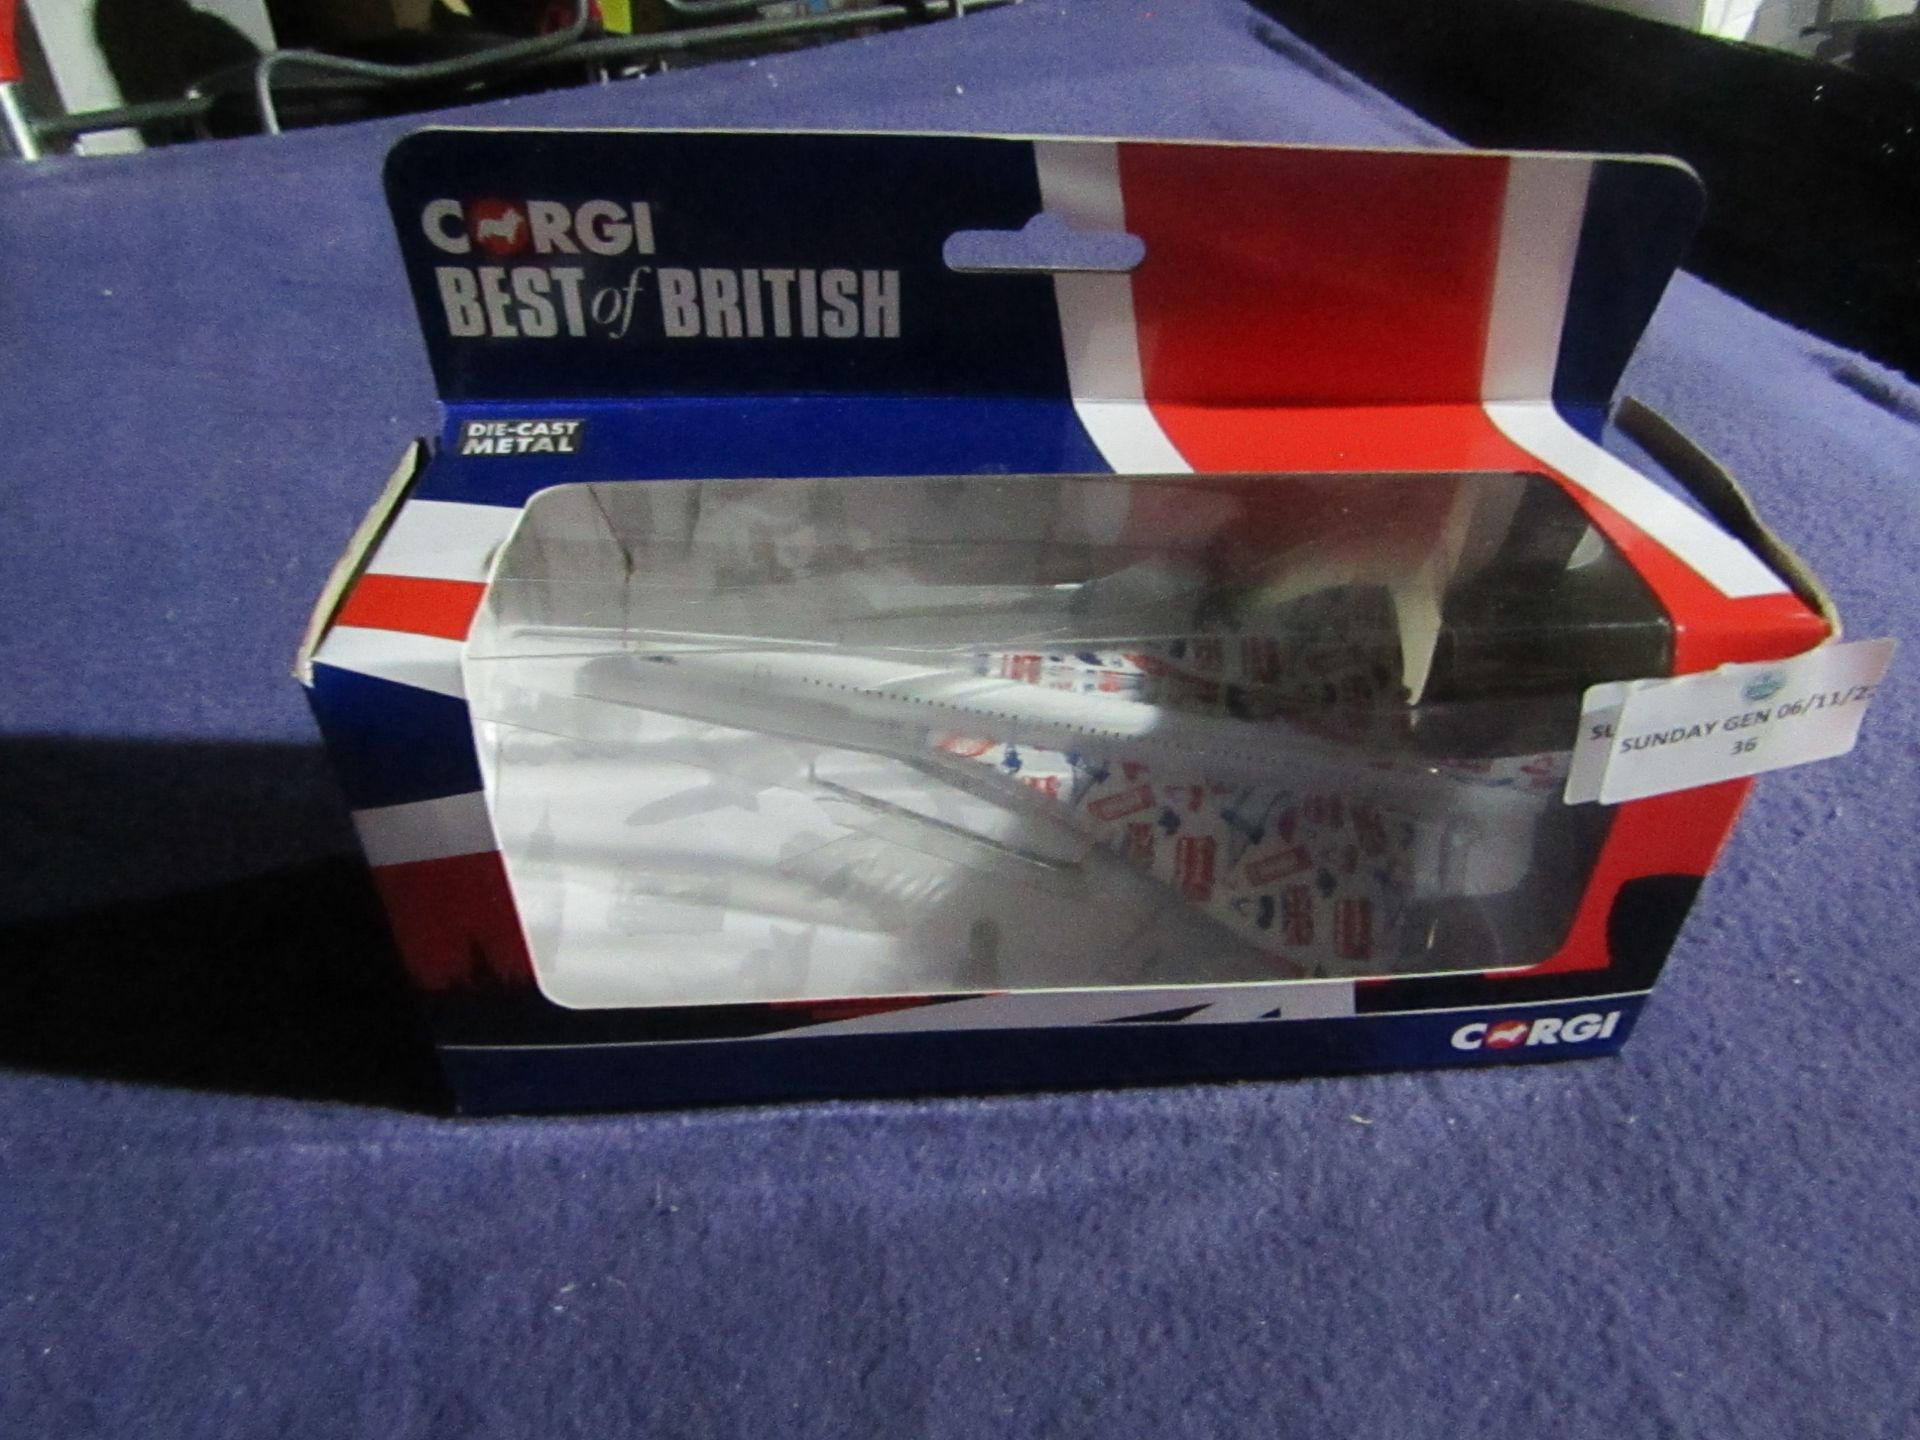 Corgi Best of British - Die Cast Plane - Packaging Damaged.